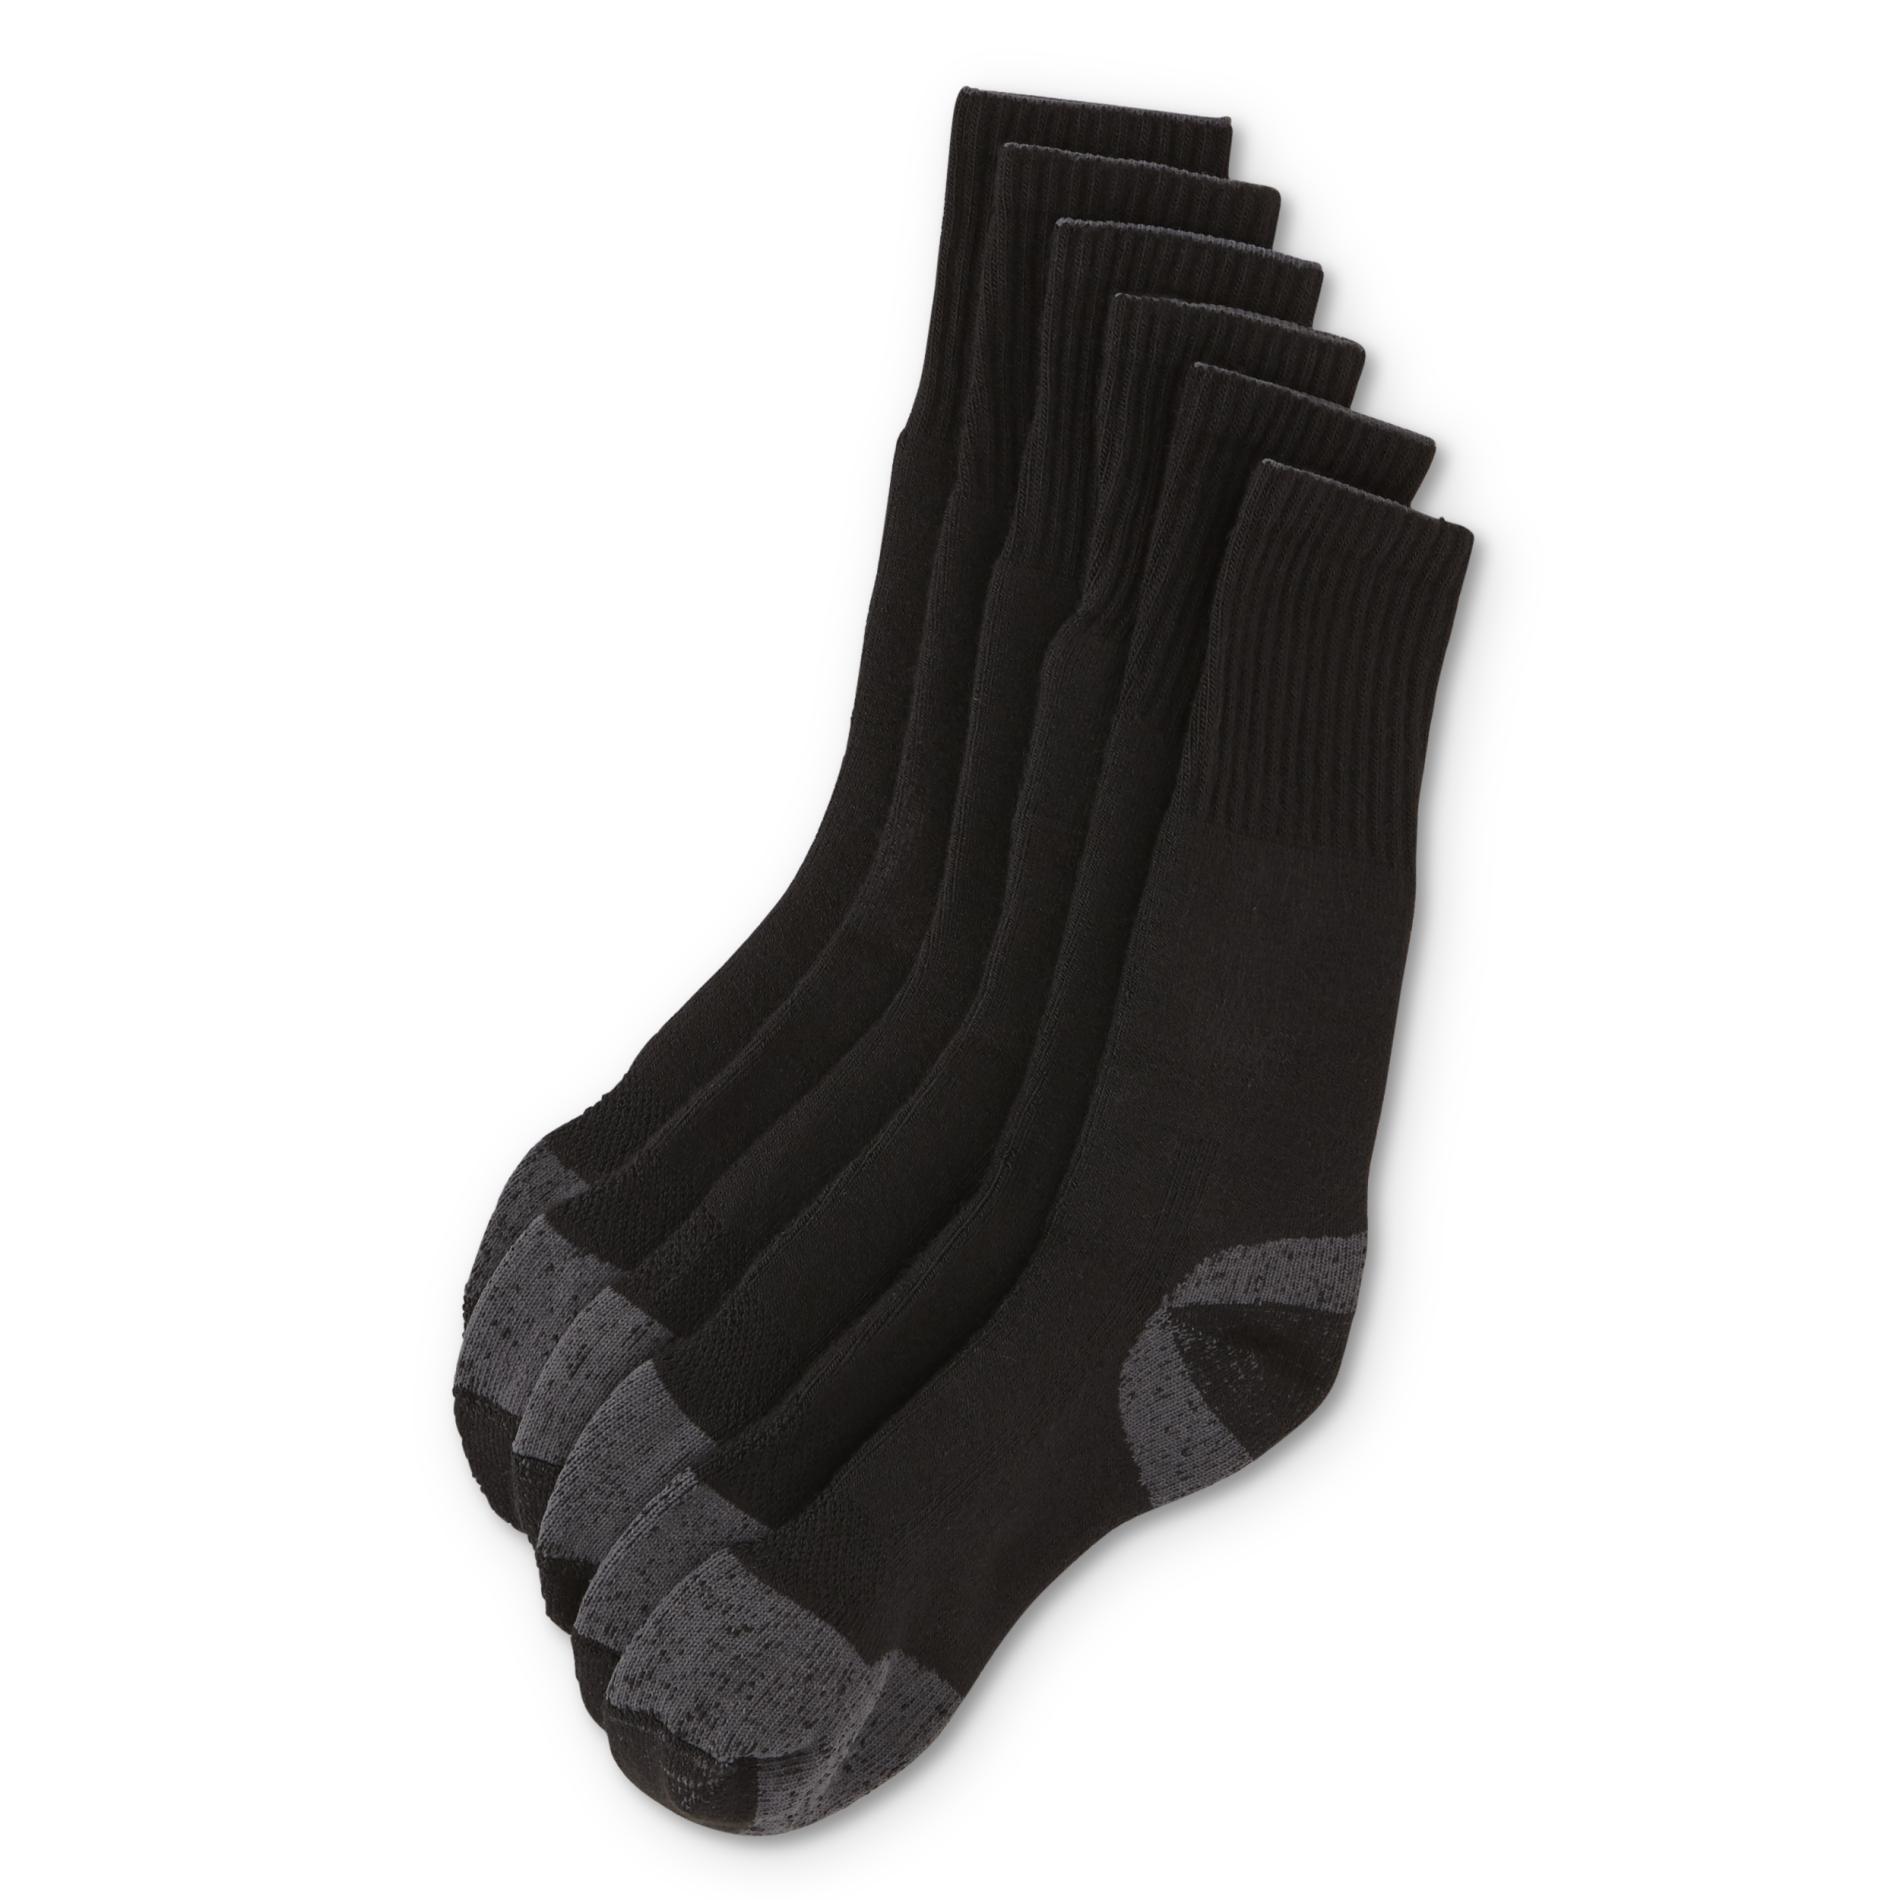 Craftsman Men's 6-Pairs Steel Toe Crew Socks